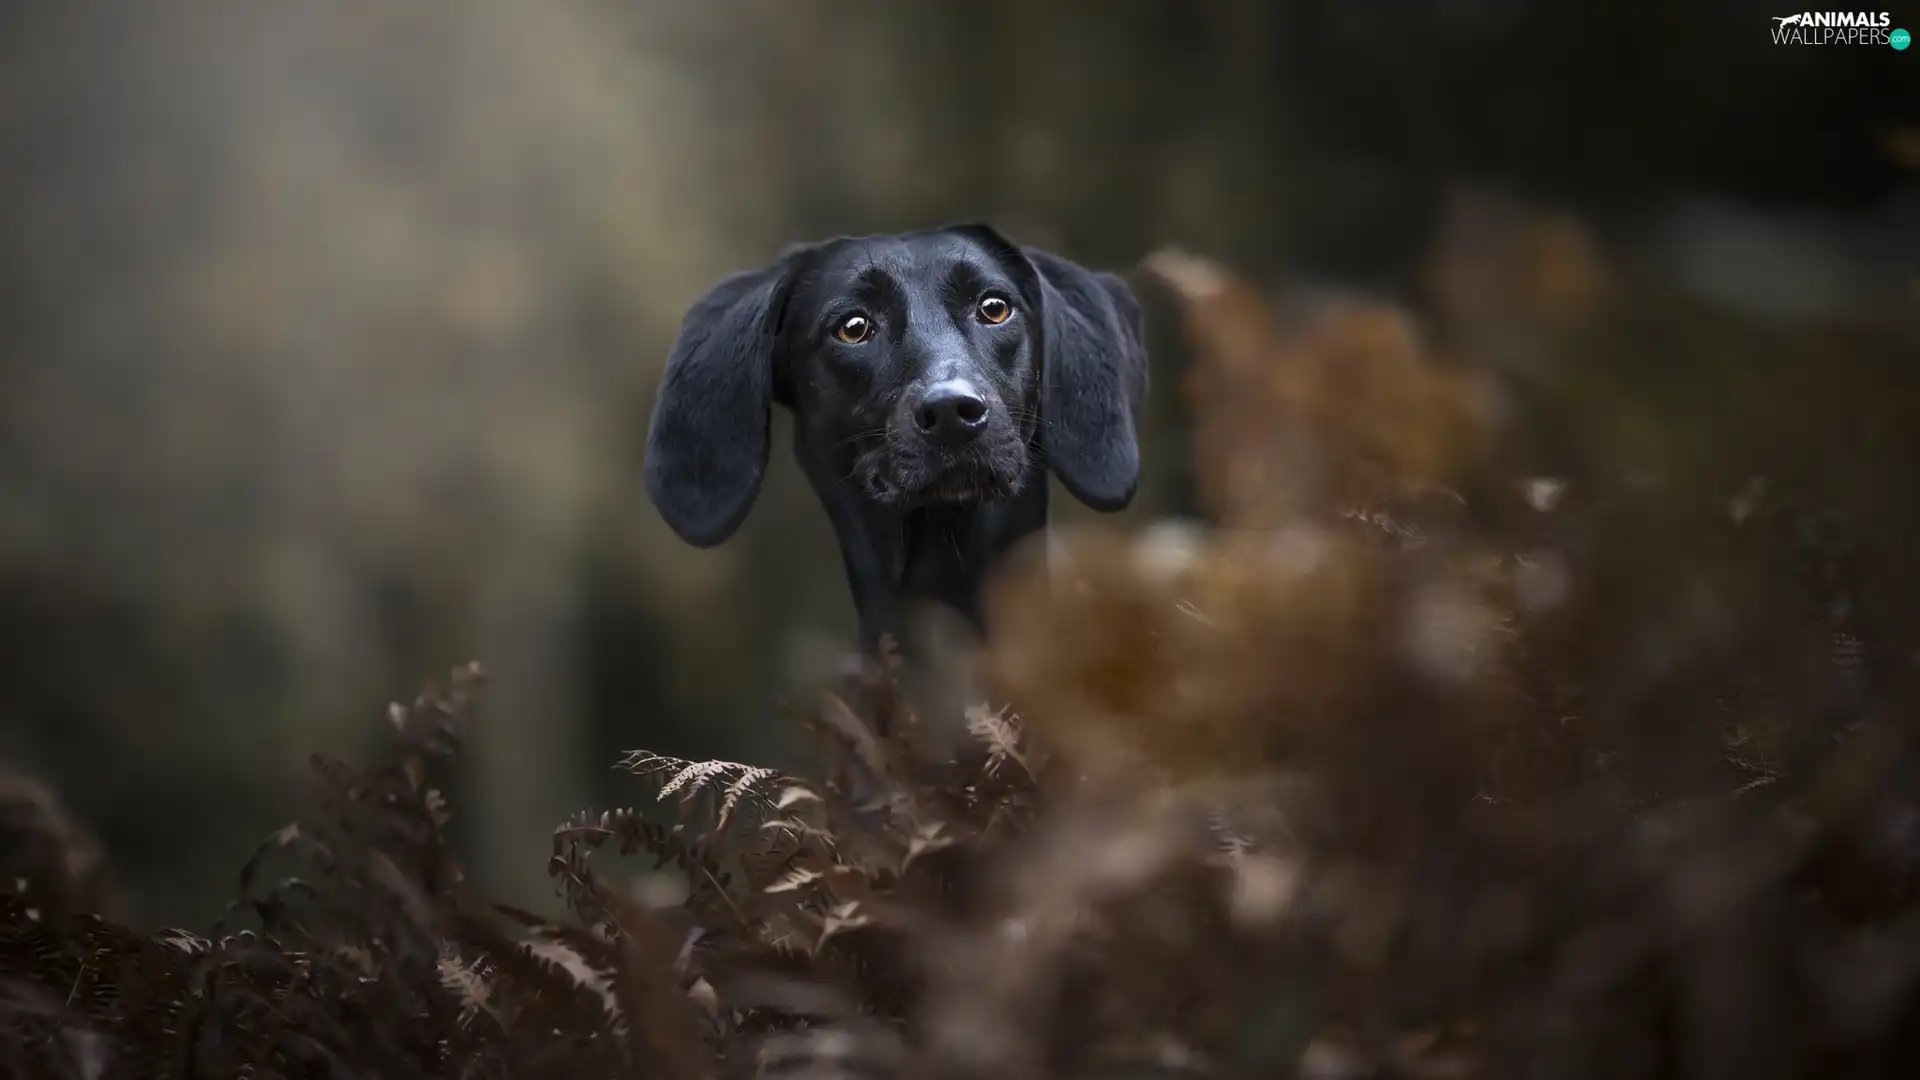 Longs, ears, background, muzzle, fuzzy, dog, Black, Plants